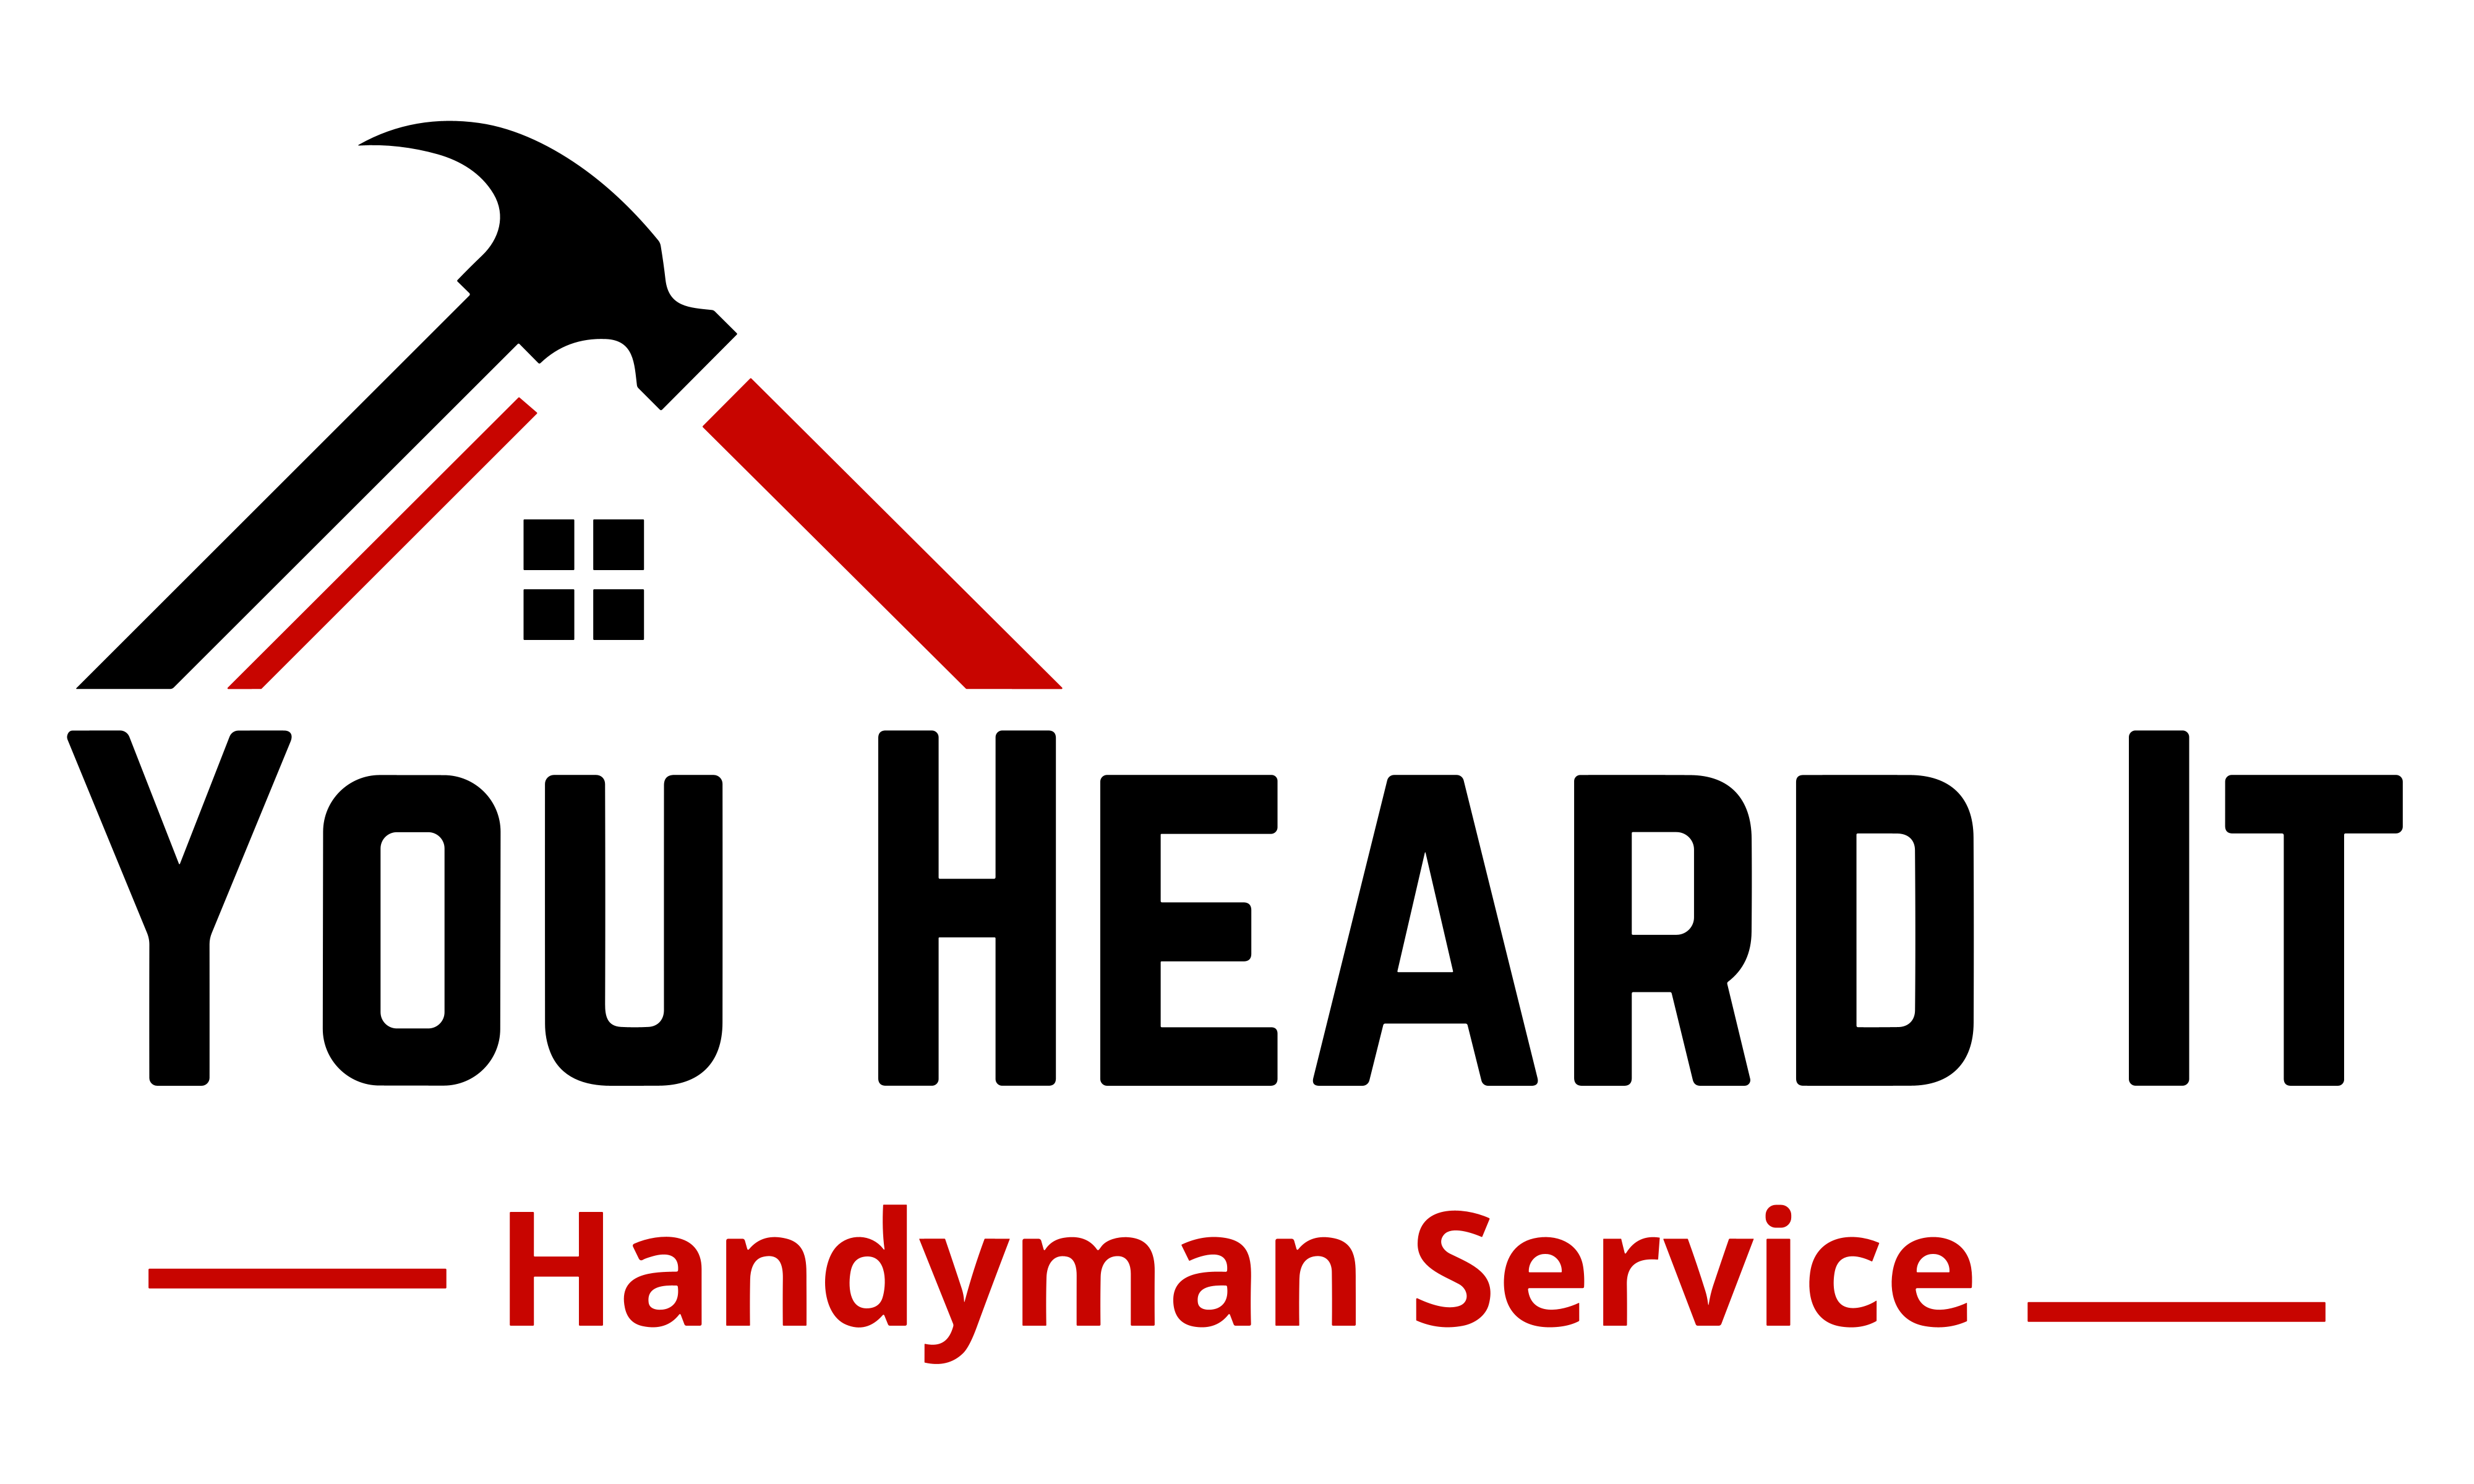 You Heard It Handyman Service